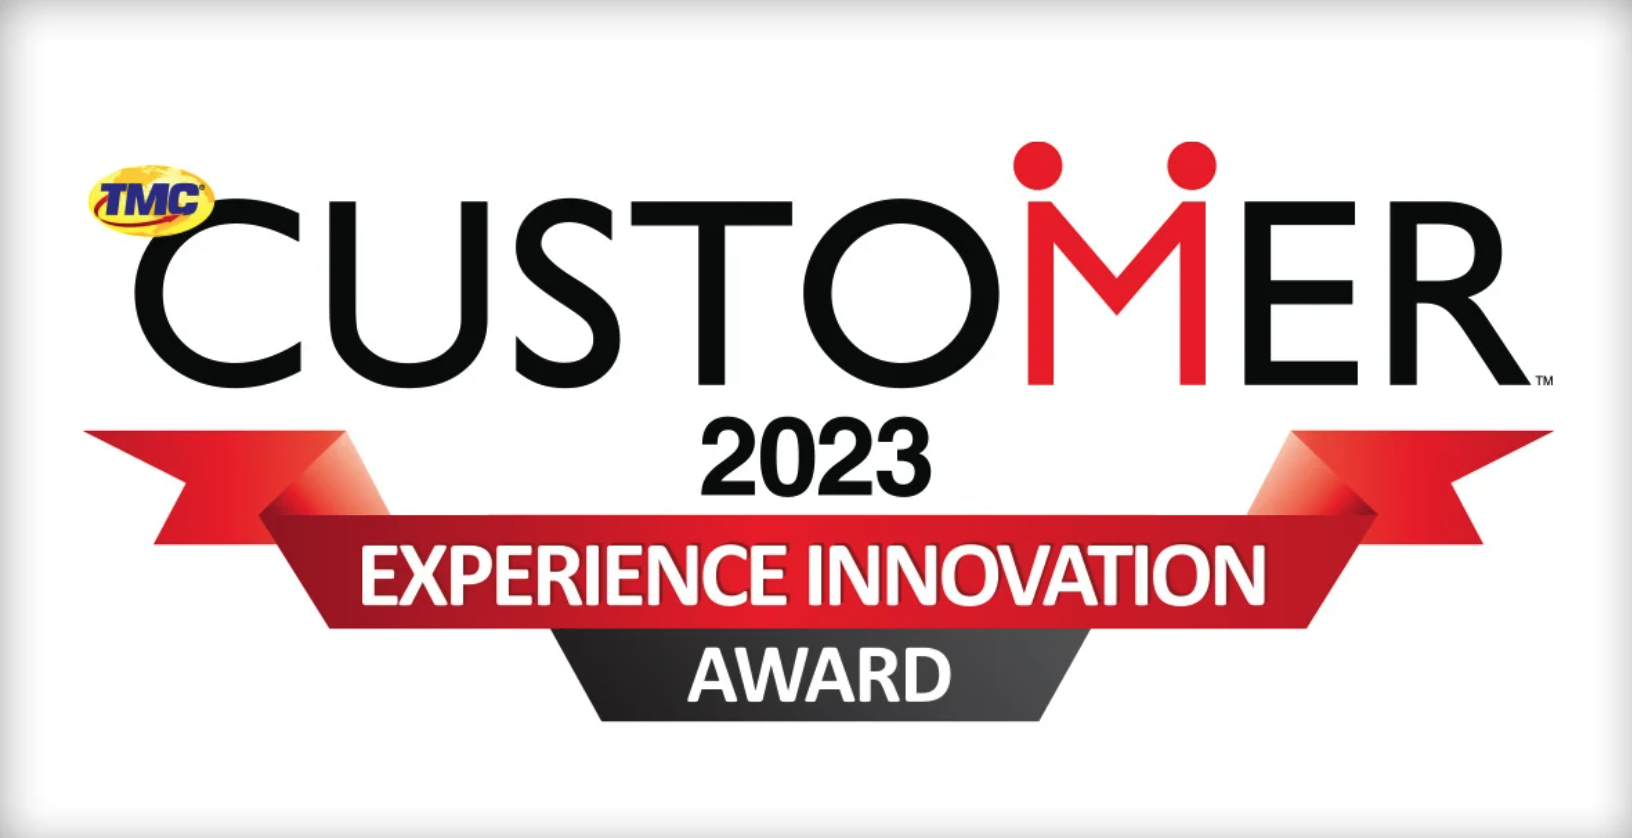 Intermedia Contact Center wins 2023 Customer Experience Innovation Awards